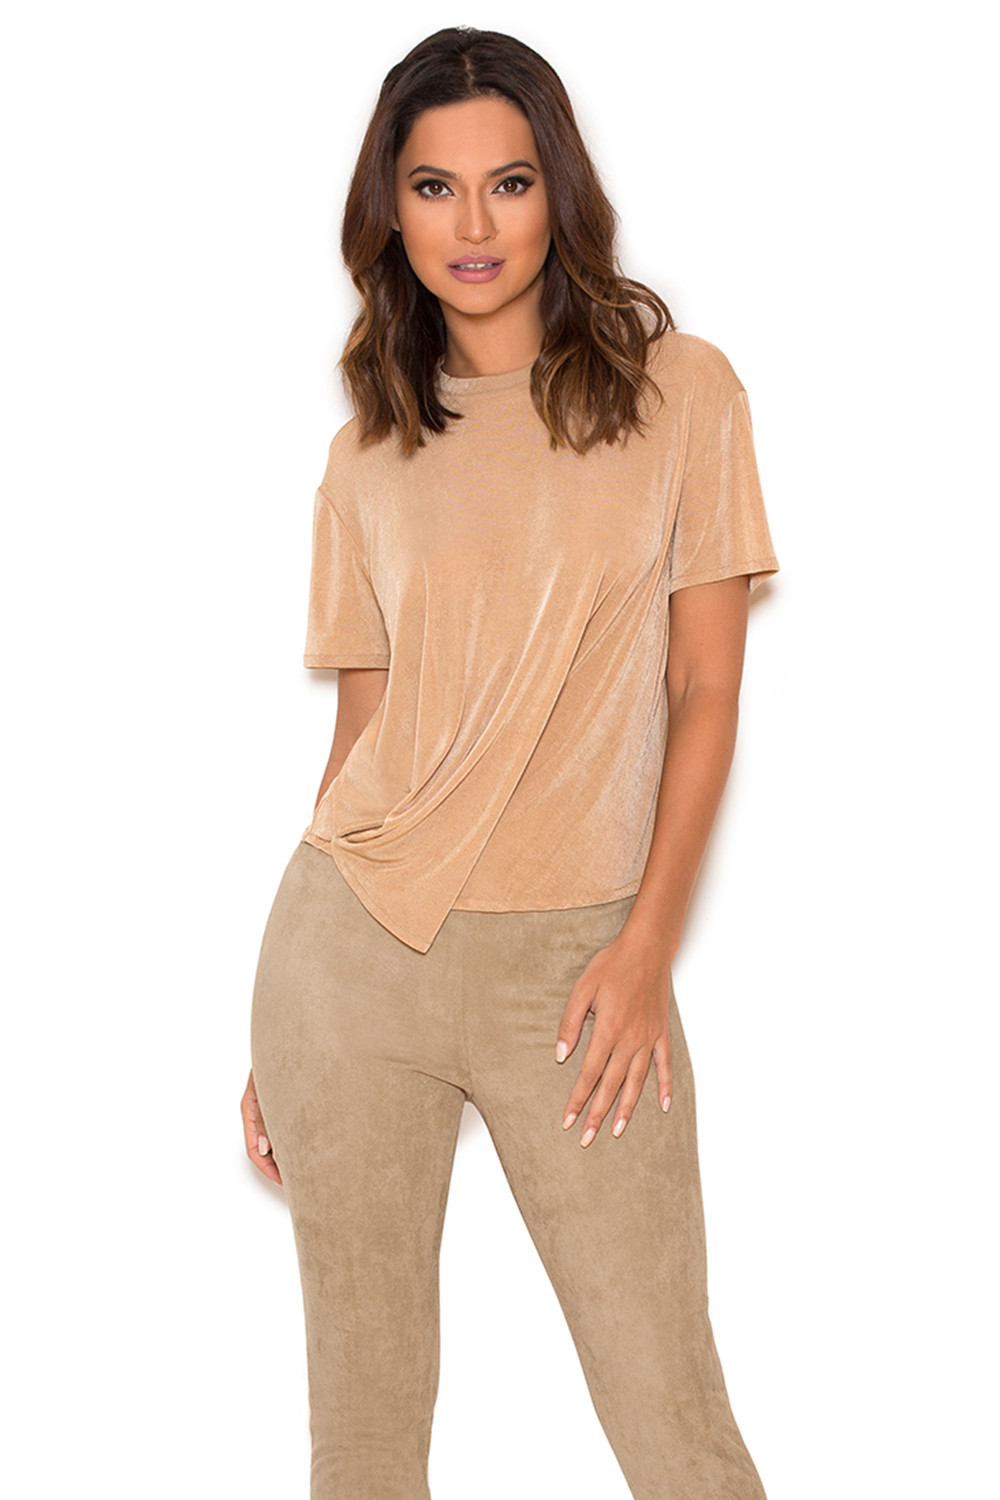 'Aspen' Sand Silky Knit Draped Tshirt - SALE